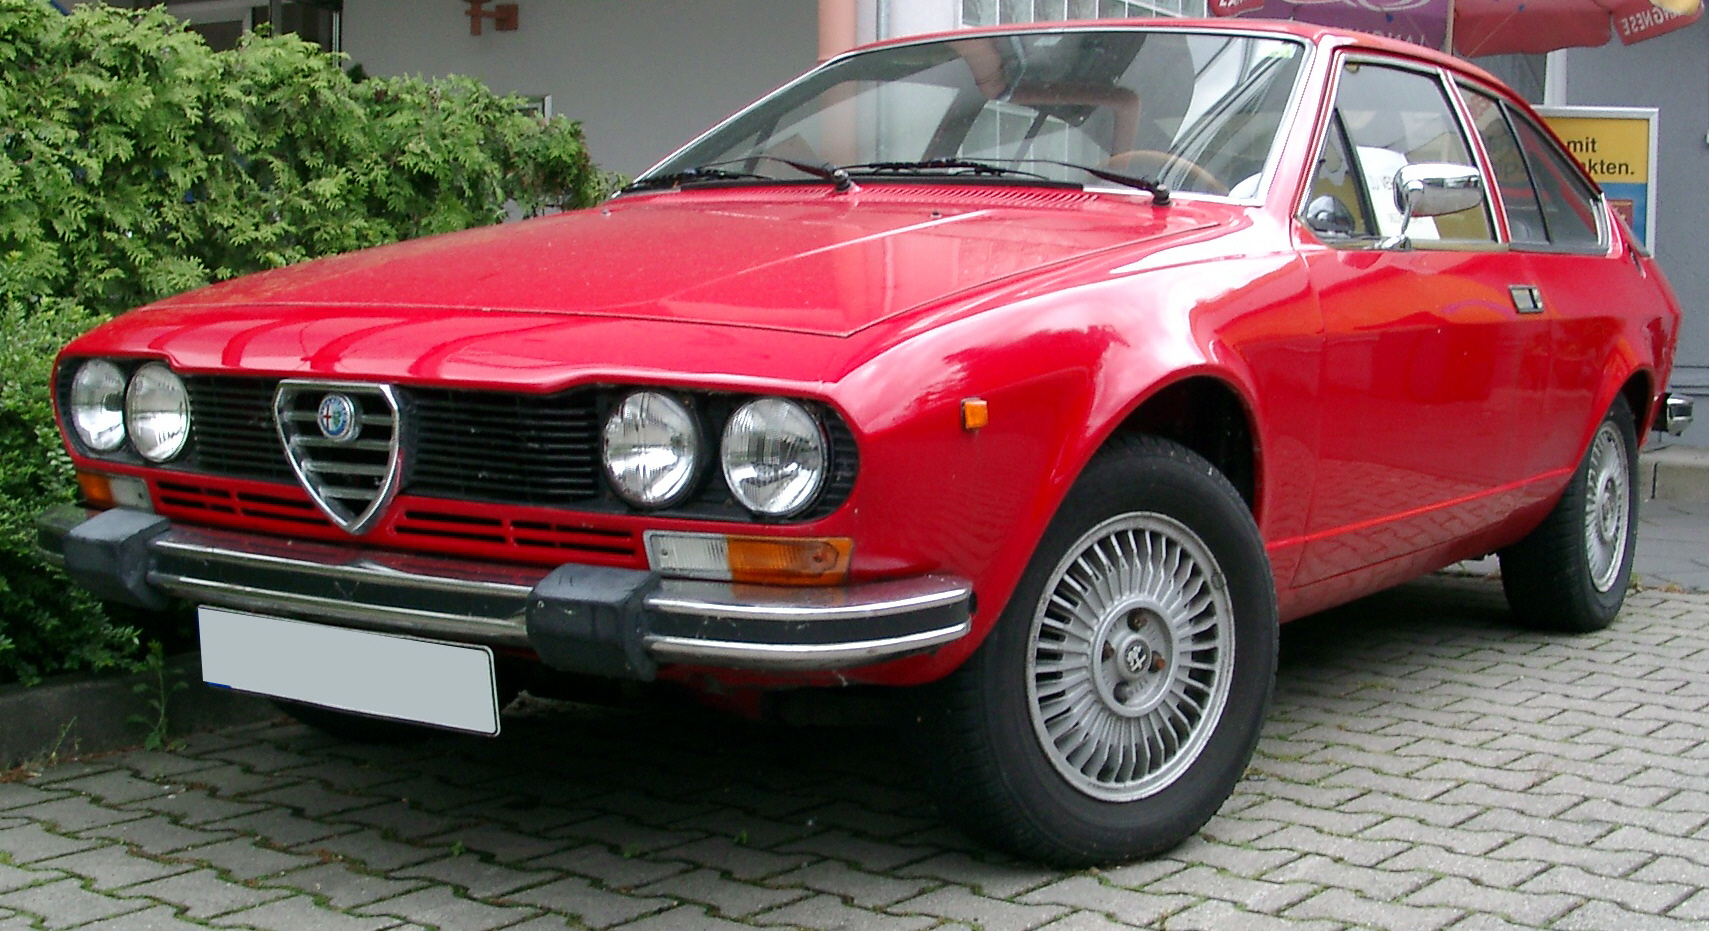 Dossier: Alfa Romeo GTV coupÃ© front 20070516.jpg - Wikimedia Commons